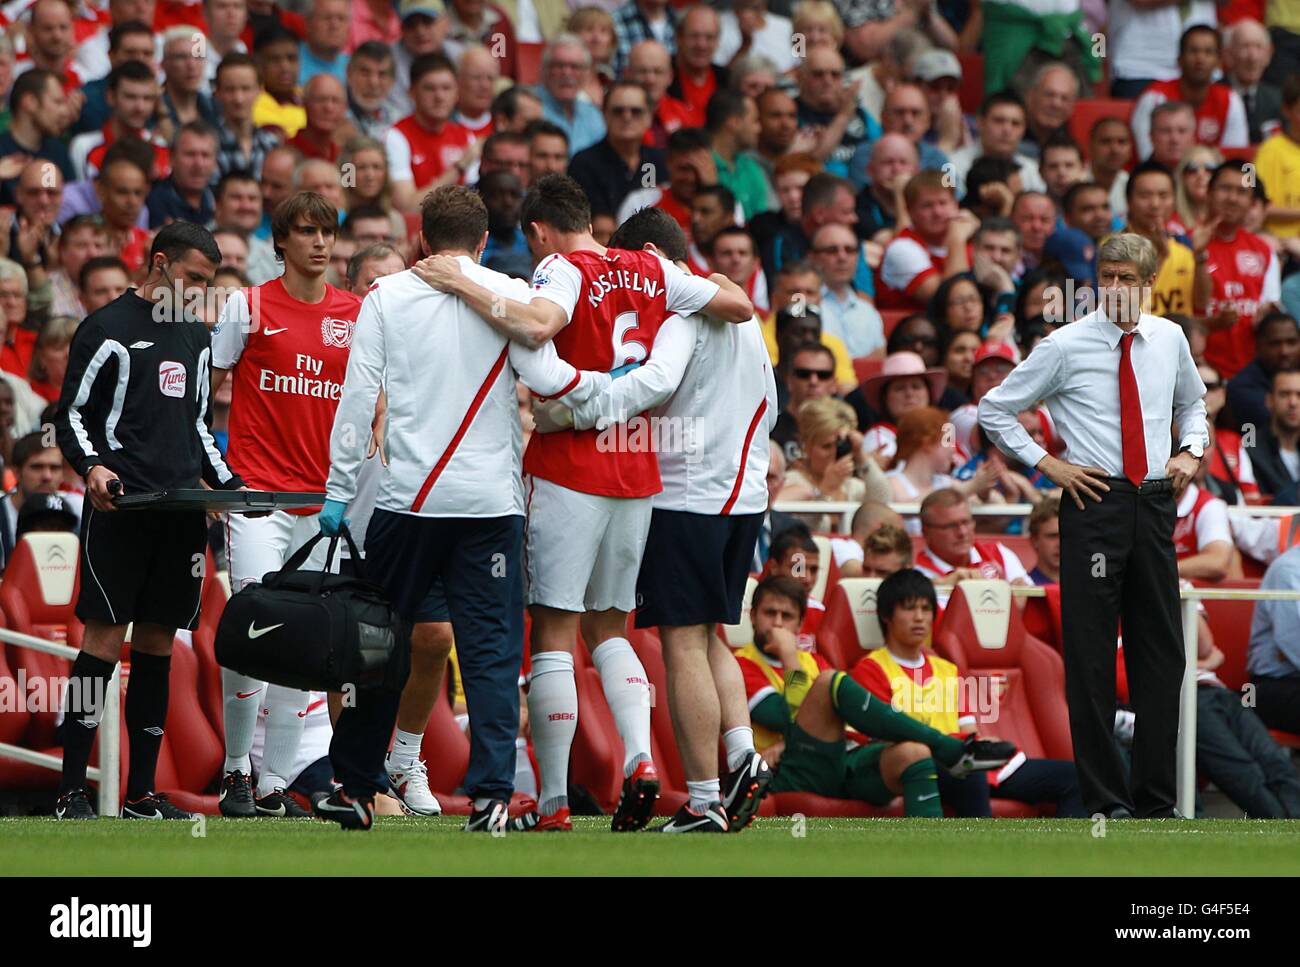 Soccer - Barclays Premier League - Arsenal v Liverpool - Emirates Stadium. Arsenal's manager Arsene Wenger (right) looks on as Laurent Koscielny is taken off injured Stock Photo